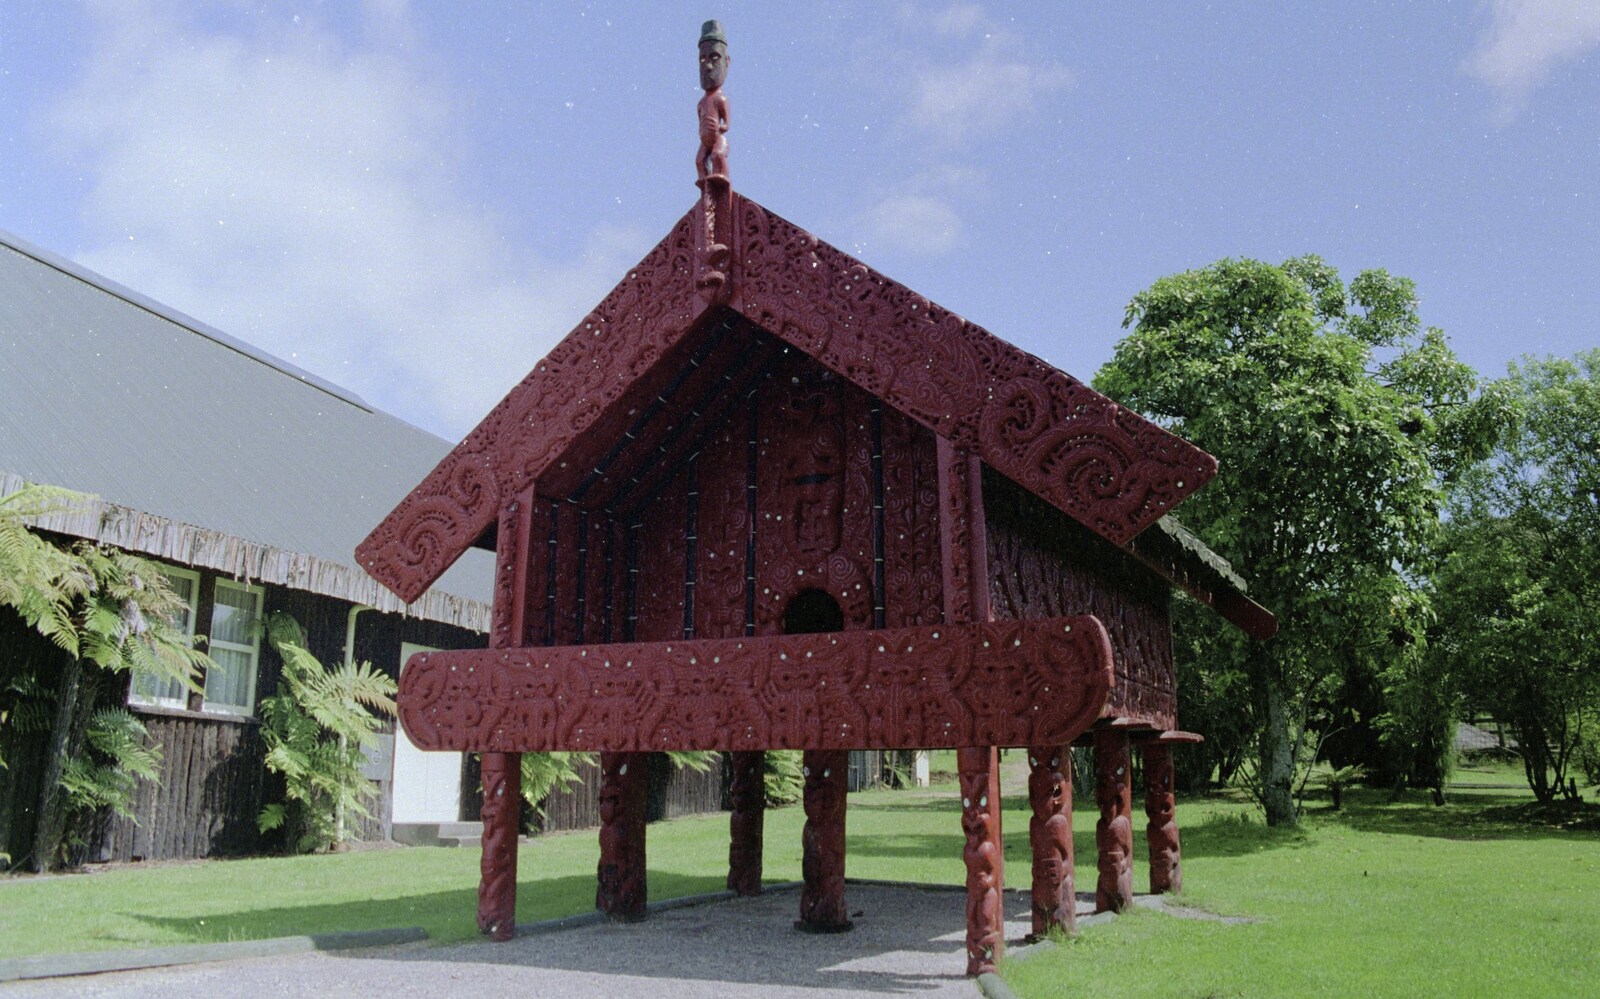 A Maori building on stilts from A Road-trip Through Rotorua to Palmerston, North Island, New Zealand - 27th November 1992